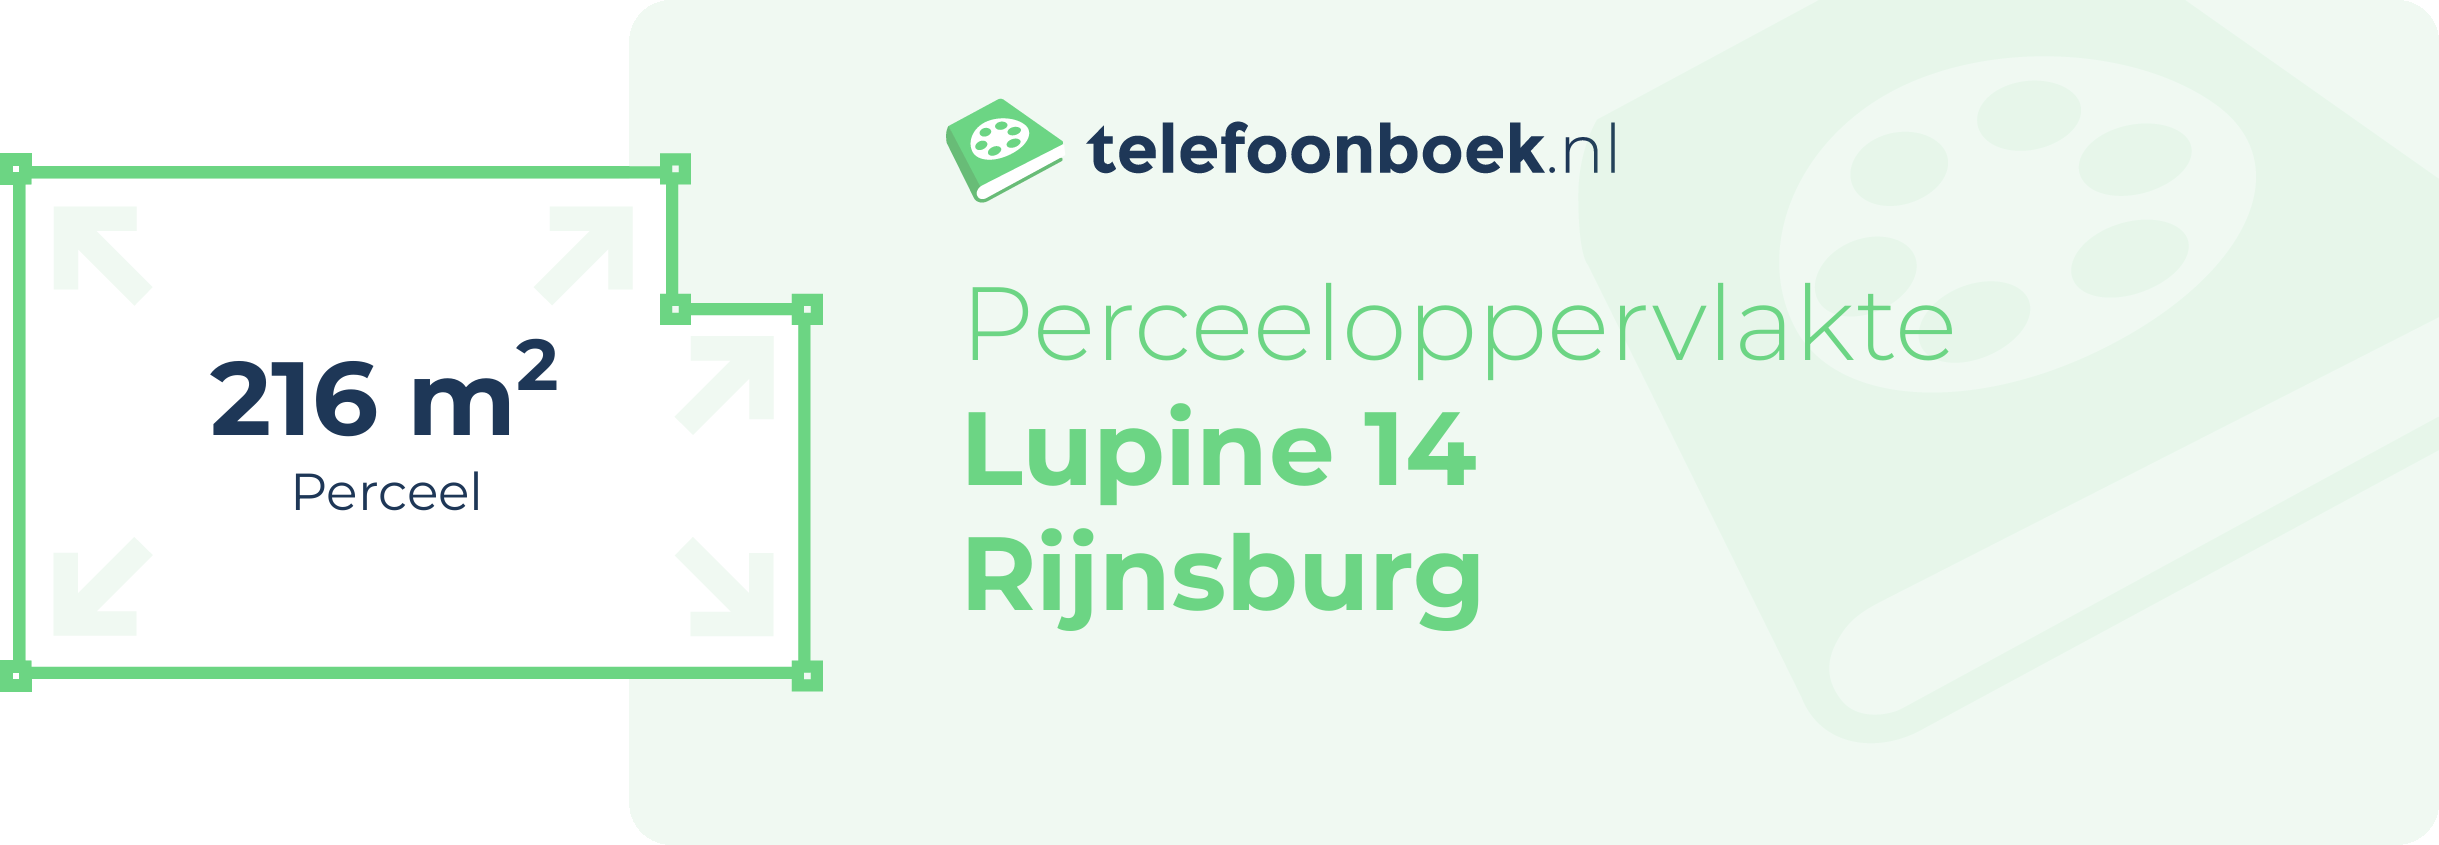 Perceeloppervlakte Lupine 14 Rijnsburg